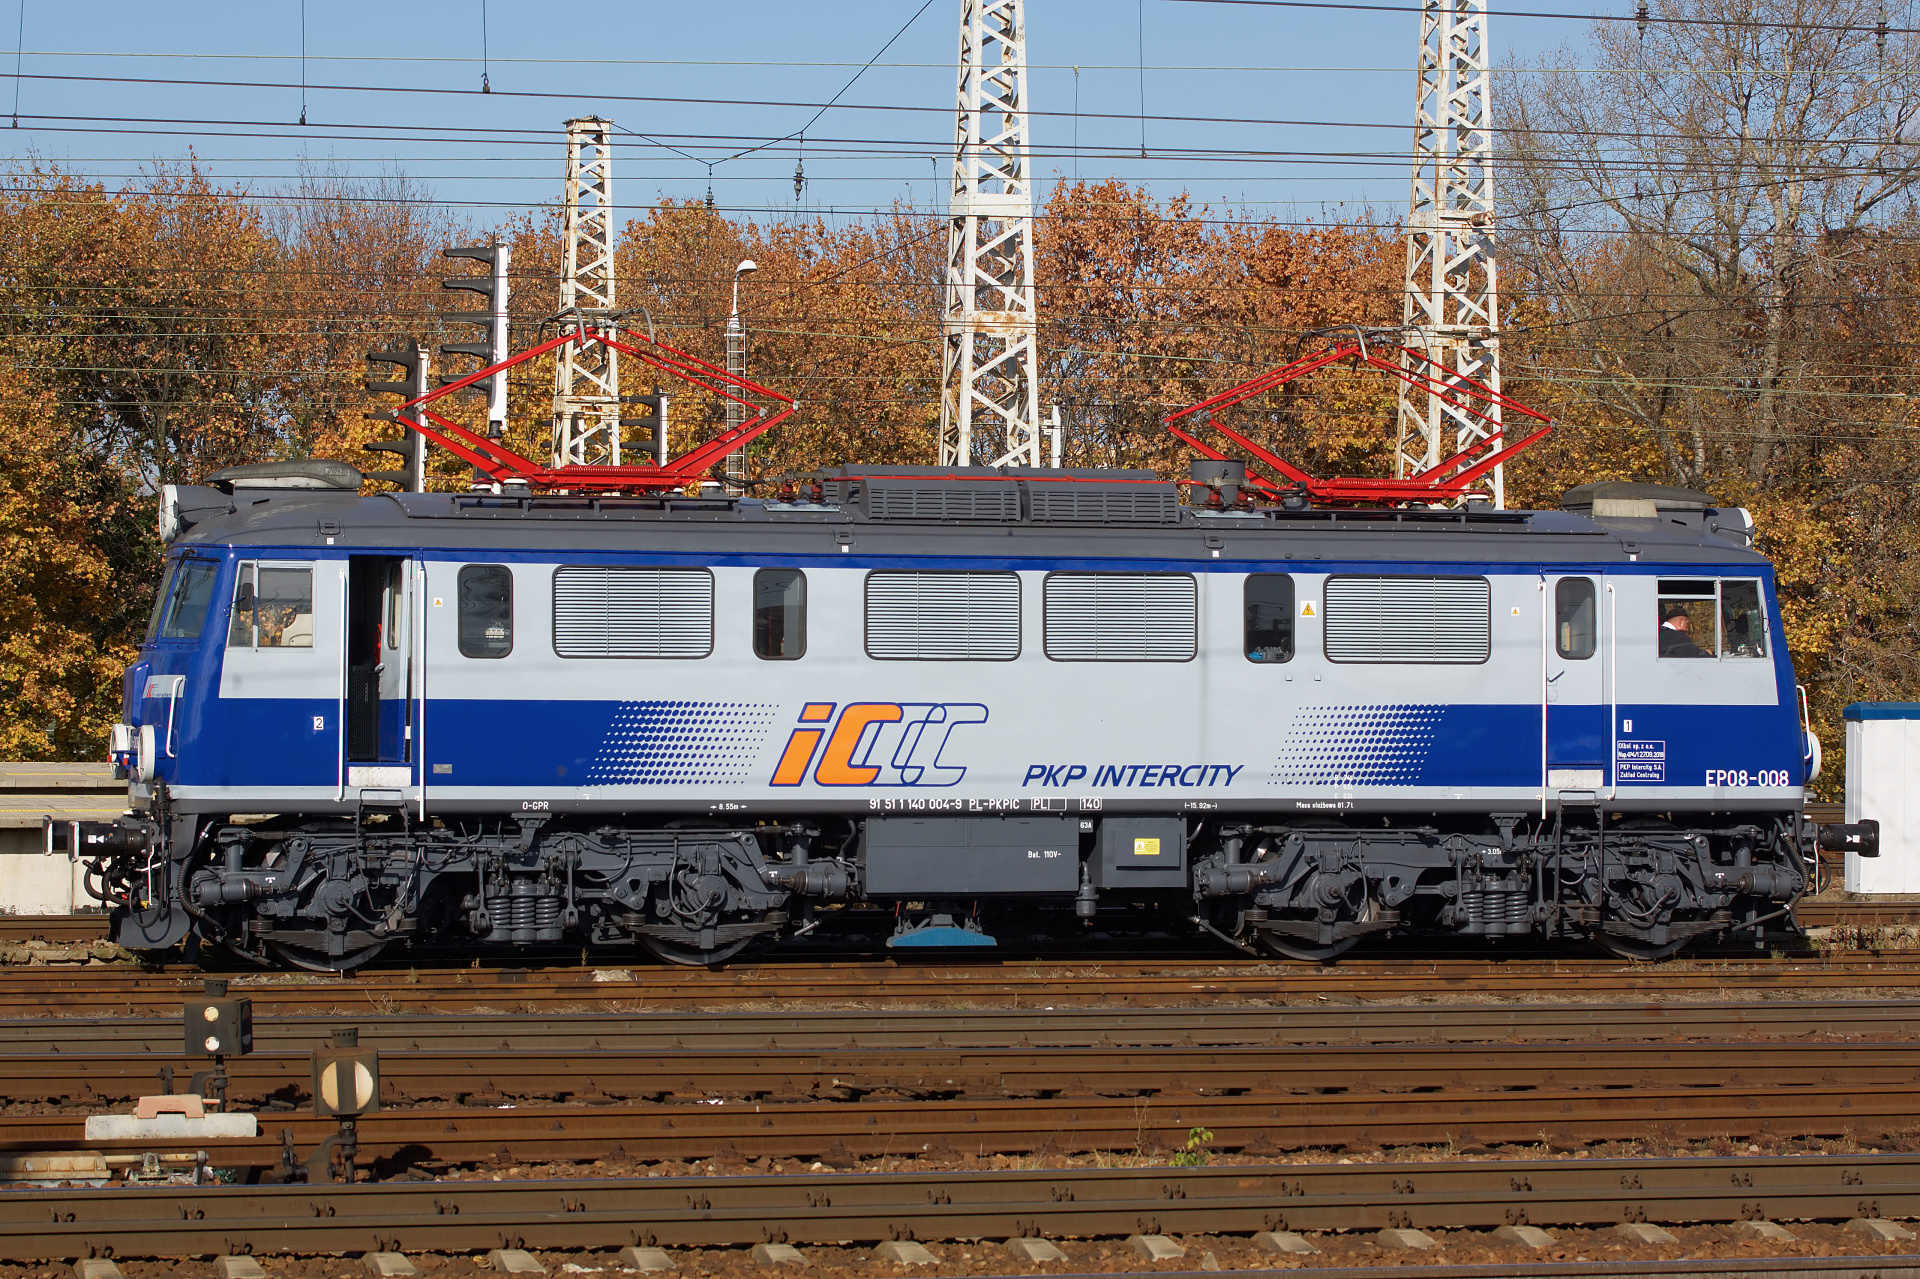 EP08-008 (Vehicles » Trains and Locomotives » Pafawag 102E)